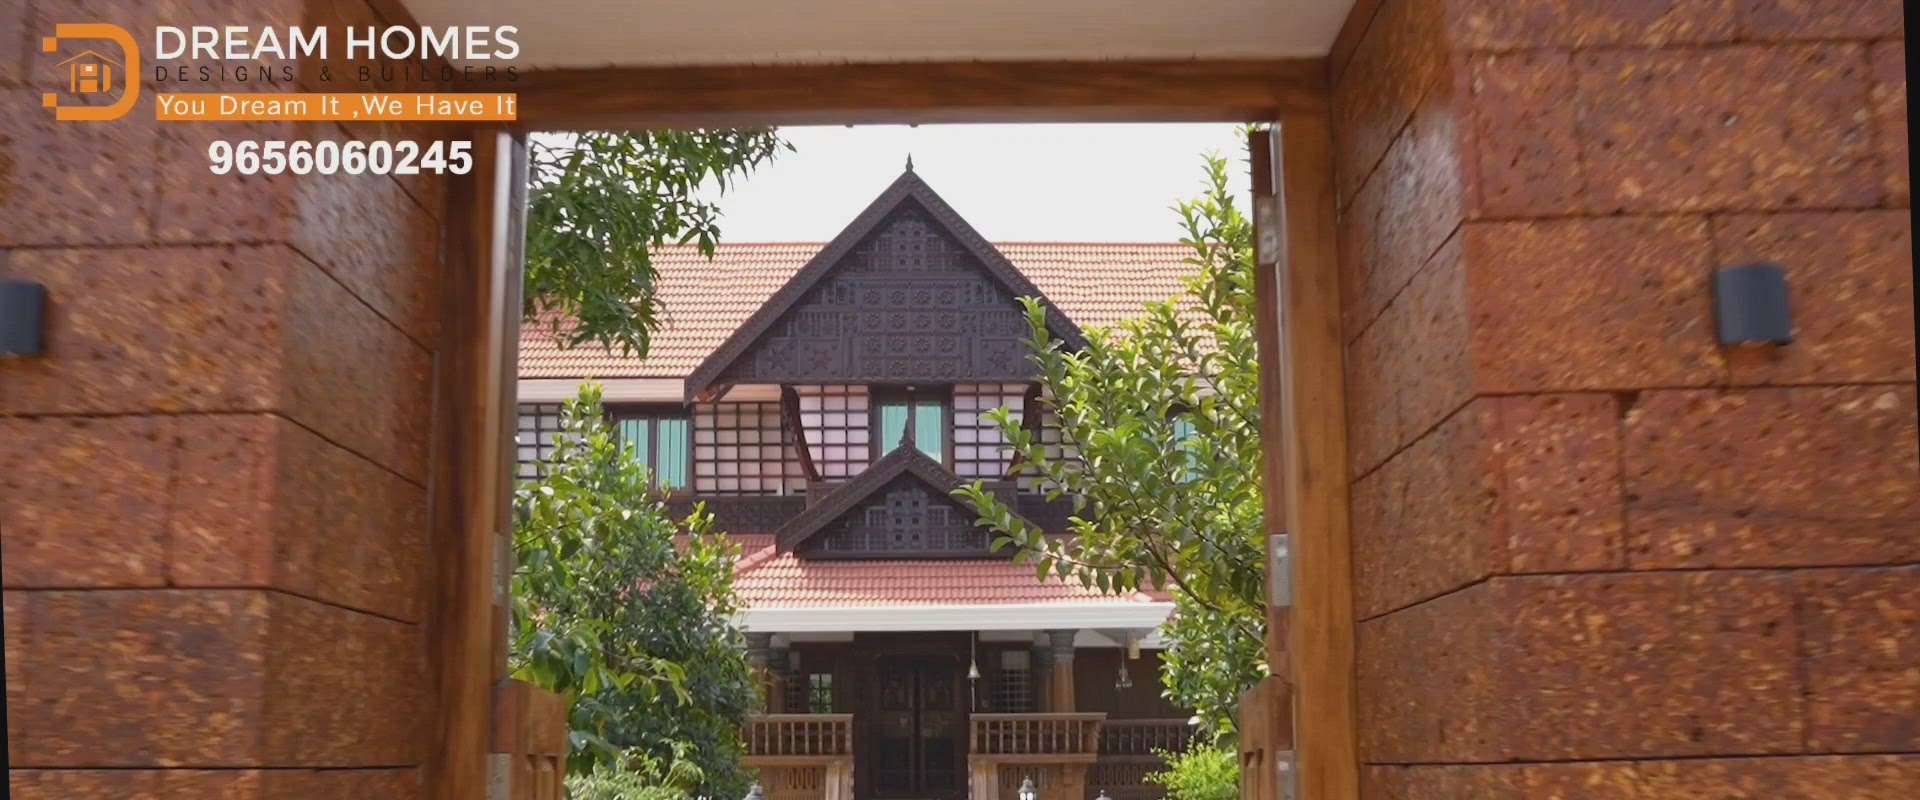 "DREAM HOMES DESIGNS & BUILDERS "
You Dream It, We Have It'

       "Kerala's No 1 Architect for Traditional Homes"
ഡ്രീം ഹോംസിലൂടെ മറ്റൊരു ട്രെഡീഷണൽ നാലുകെട്ട് വീട് 
("APPACHIMANA")എറണാകുളം ജില്ലയിൽ പൂത്രിക്കയിൽ"
ക്ലയന്റ് :Mr Libin Chacko🙏 Linet Libin 🙏

#traditionalhome #traditional

"4700 സ്‌ക്വയർ ഫീറ്റ് വിസ്ത്രീതിയിൽ പൂമുഖം, വരാന്ത, ഓപ്പൺ ലിവിങ്, നടുമുറ്റതോടുകൂടിയ വരാന്ത, ഓപ്പൺ ഡൈനിങ്, ഫാമിലി ലിവിങ്, കിച്ചൺ, വർക്കേരിയ, 4 ബെഡ്‌റൂംസ് അറ്റാച്ഡ്, കൂടാതെ ഔട്ട്‌ സൈഡ് കിച്ചൺ സെർവെൻറ് റൂം ബാത്തറ്റാച്ച്ഡ്, പോർച്, ഫസ്റ്റ് ഫ്‌ളോർ കൂത്തമ്പലം മാതൃക ബിഗ് ഹാൾ ബാൽക്കണി എന്നിവയടങ്ങുന്ന മനോഹരമായ അസ്സലൊരു നാലുകെട്ട് വീട്"

We are providing service to all over India 
No Compromise on Quality, Sincerity & Efficiency.

#traditionalhome #traditional 

www.dreamhomesbuilders.com
For more info
9656060245
7902453187